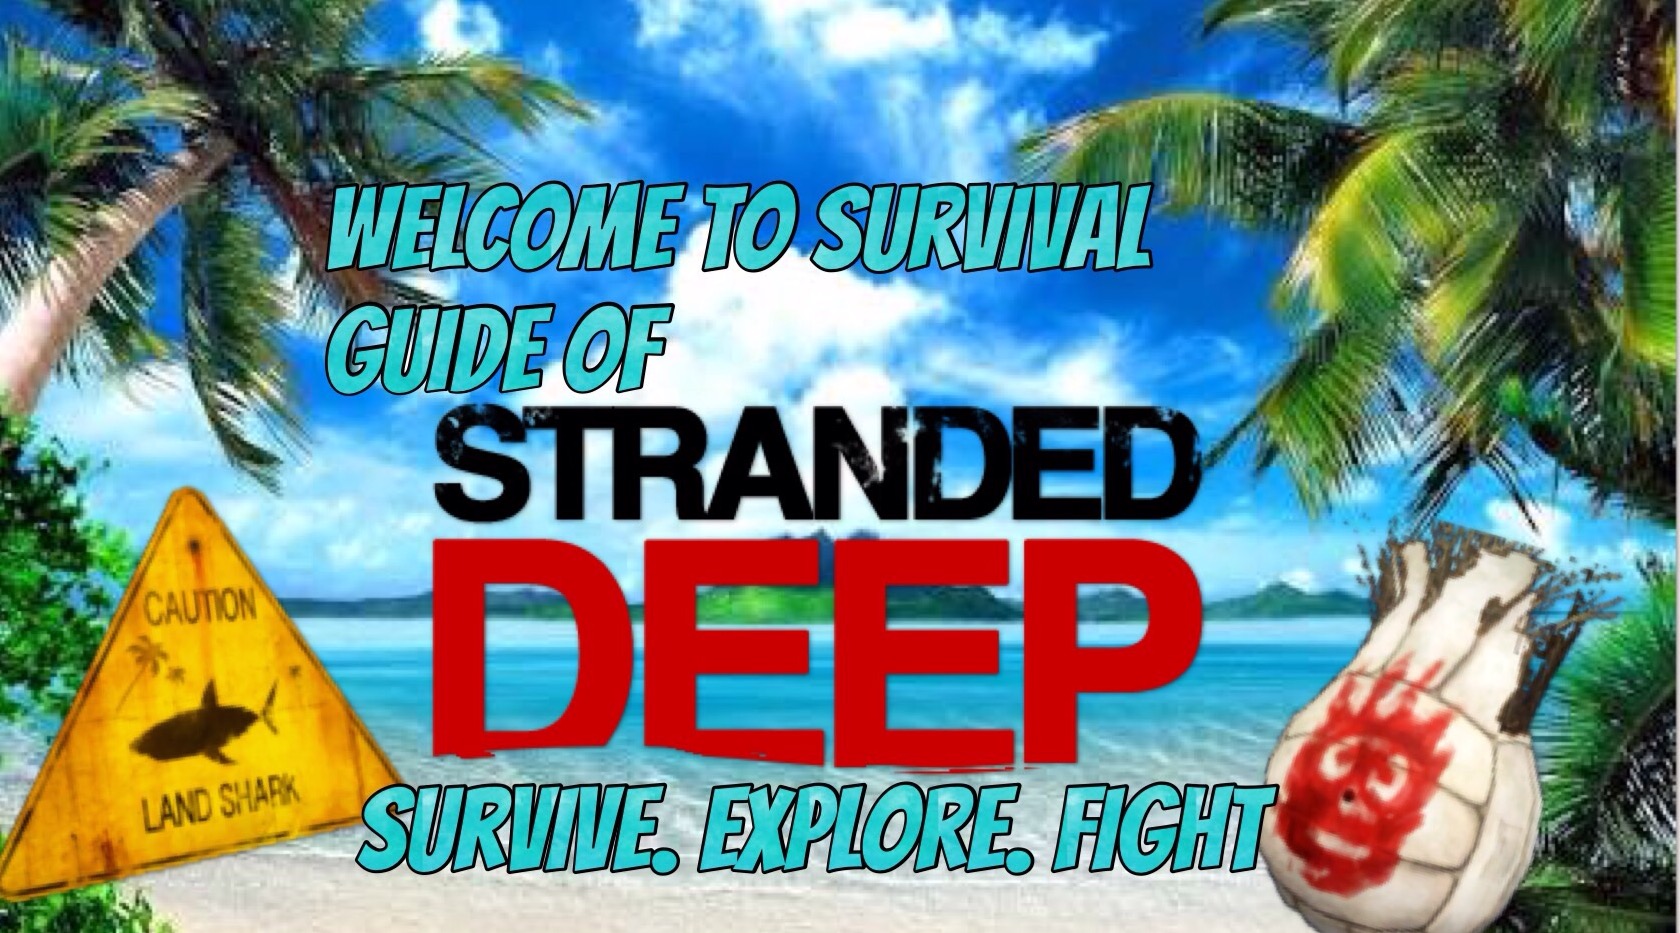 Stranded Deep Gameplay  DEADEX EASTER EGG! (Stranded Deep Gameplay HD)  Part 3 